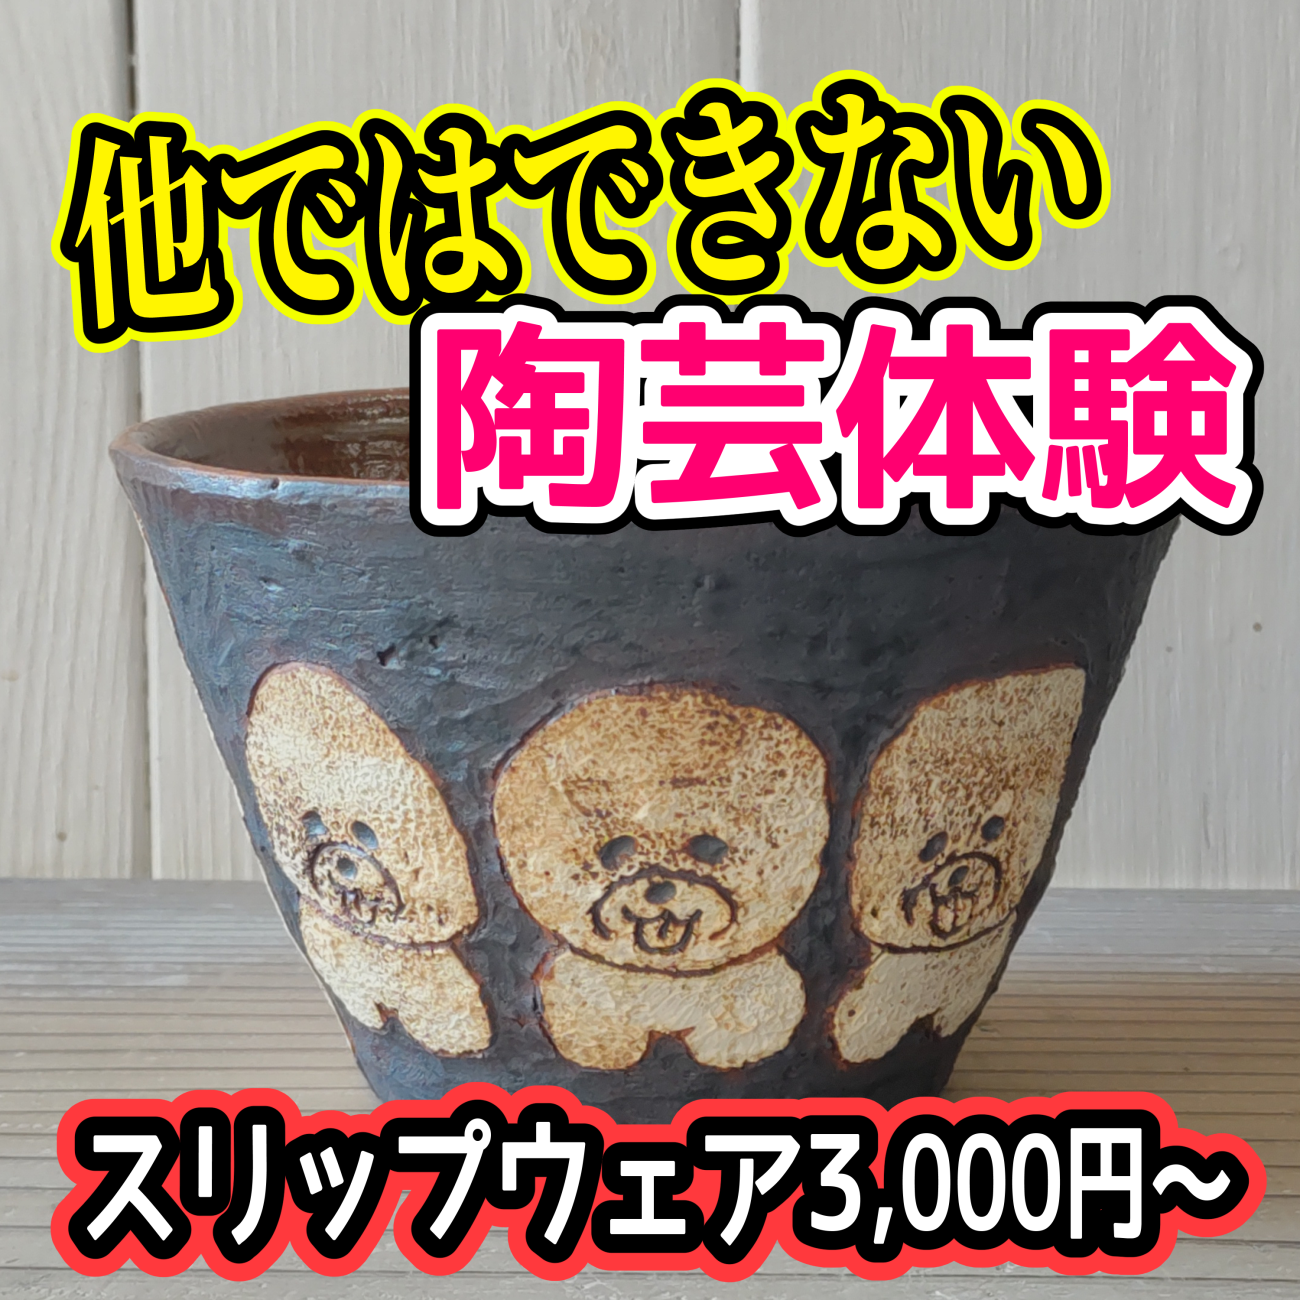 陶芸体験3,000円